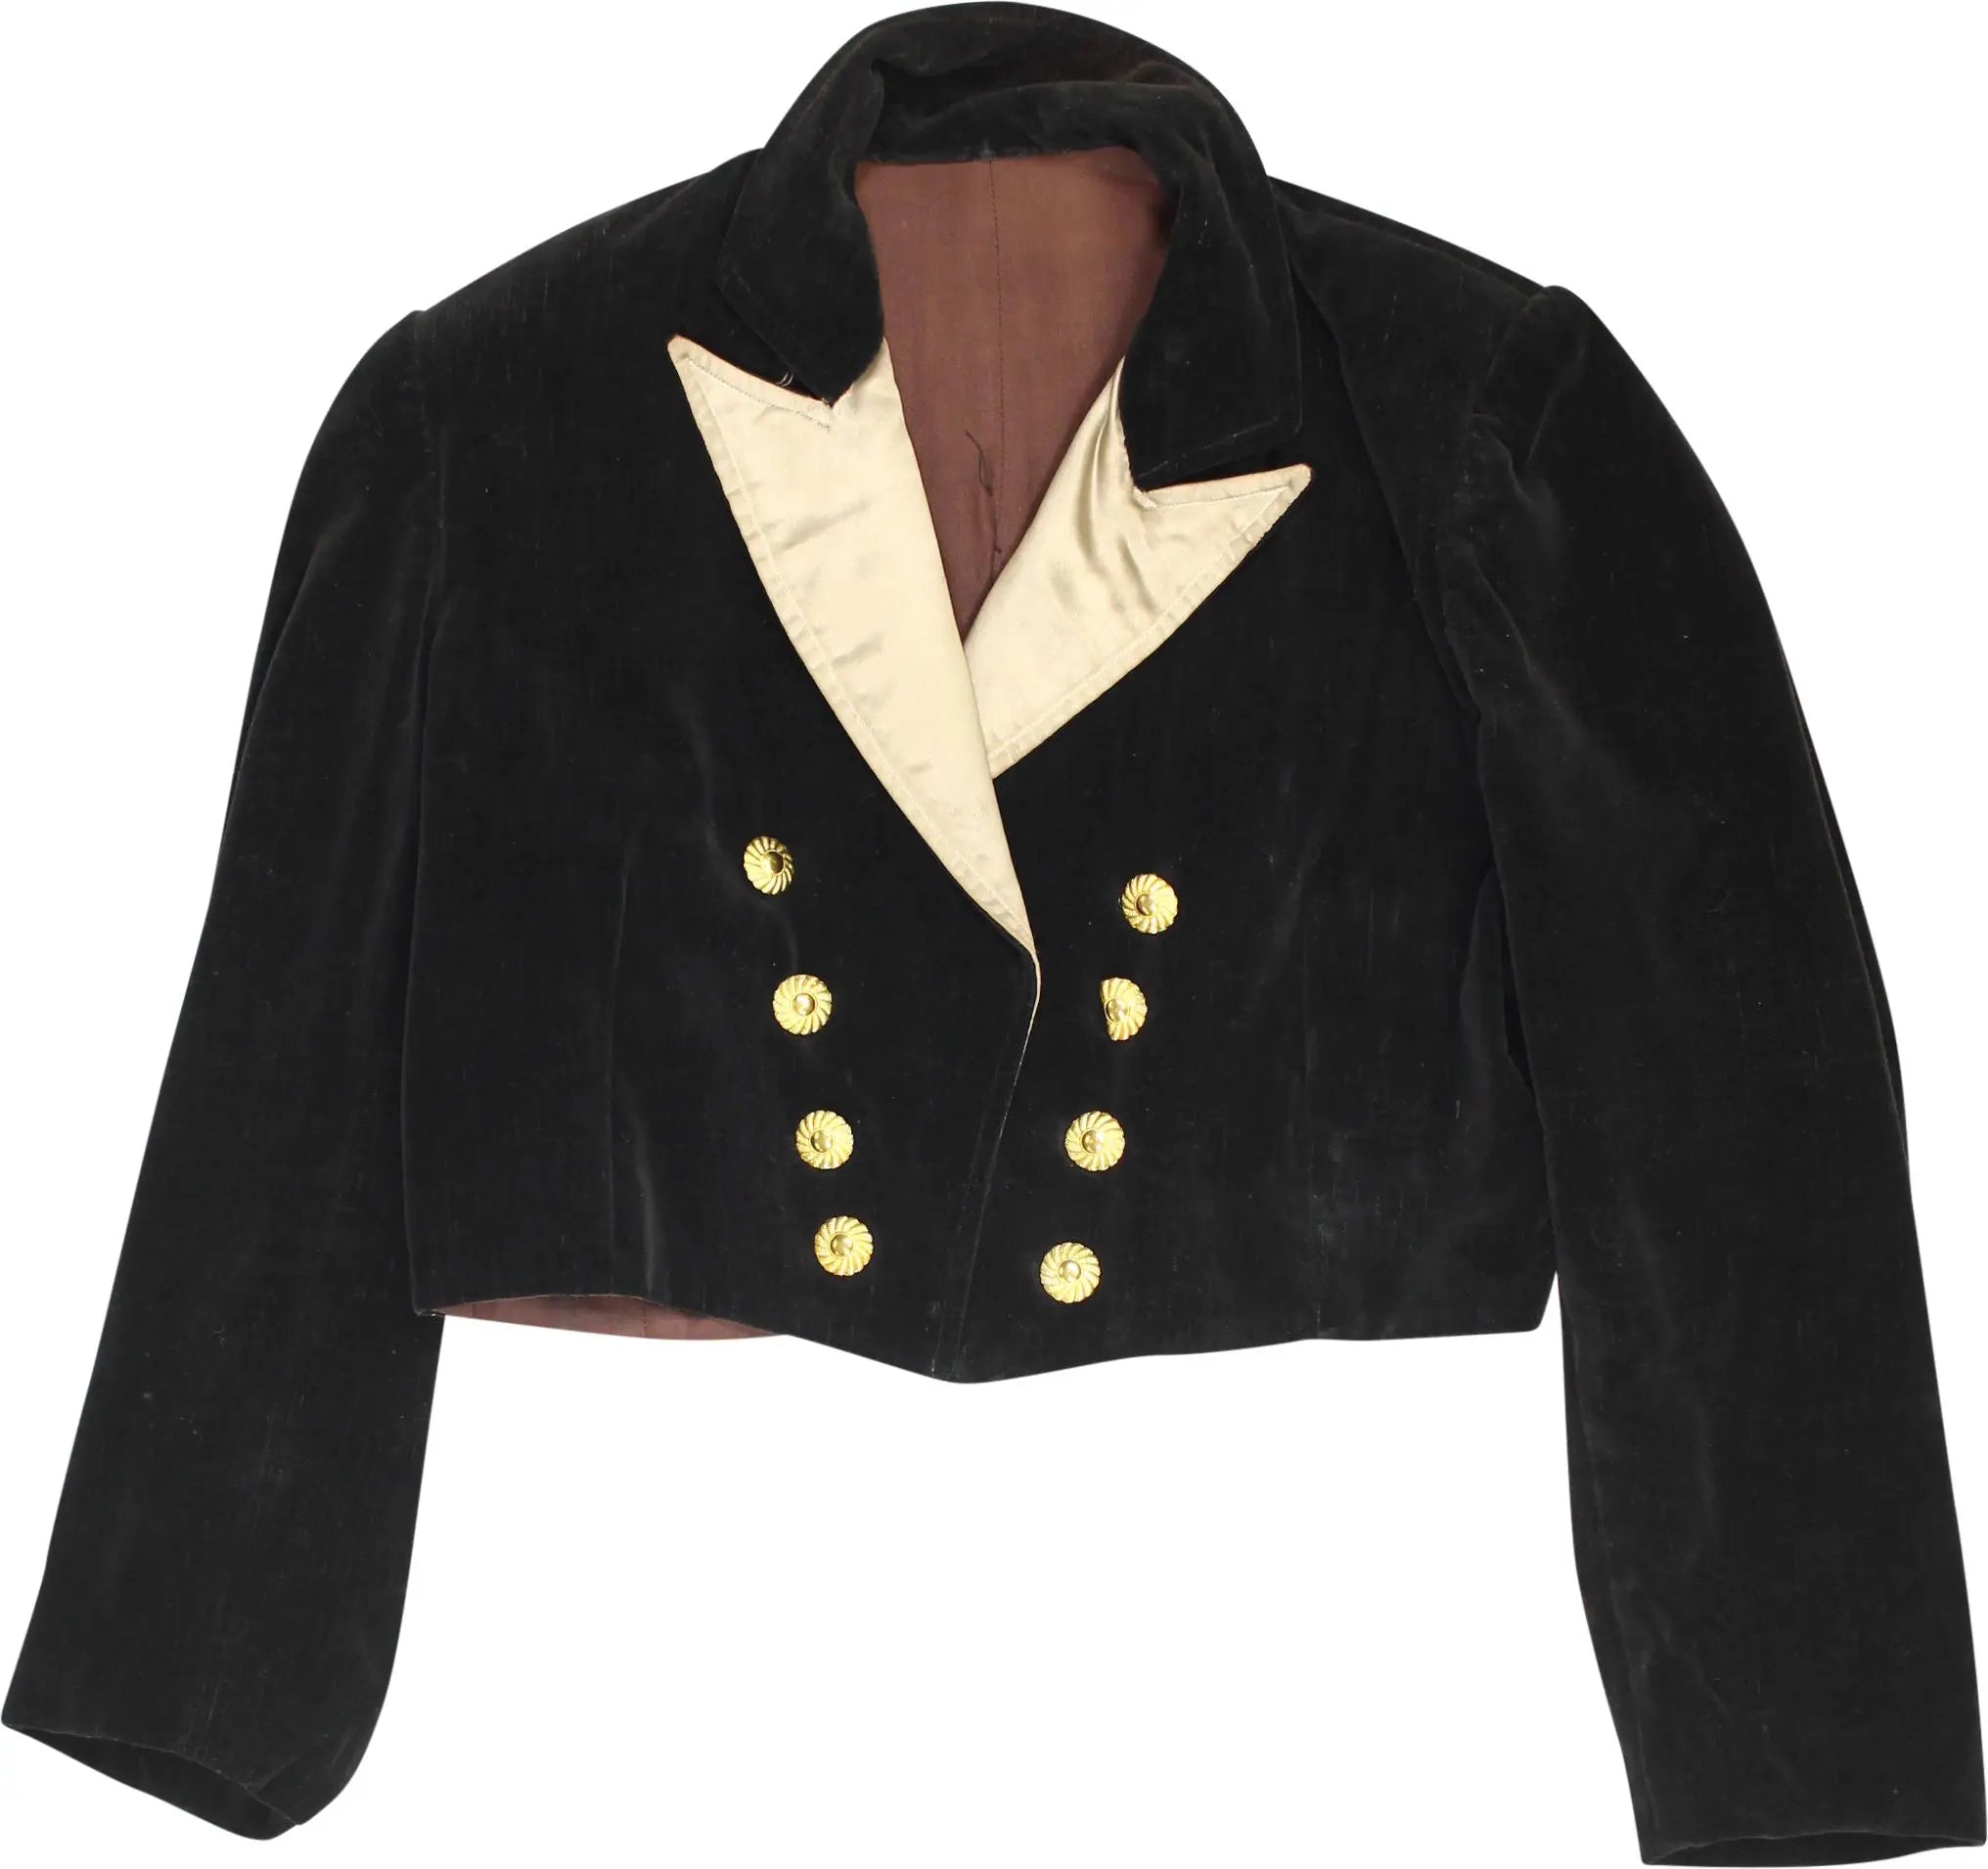 Handmade - Handmade Velvet Jacket- ThriftTale.com - Vintage and second handclothing